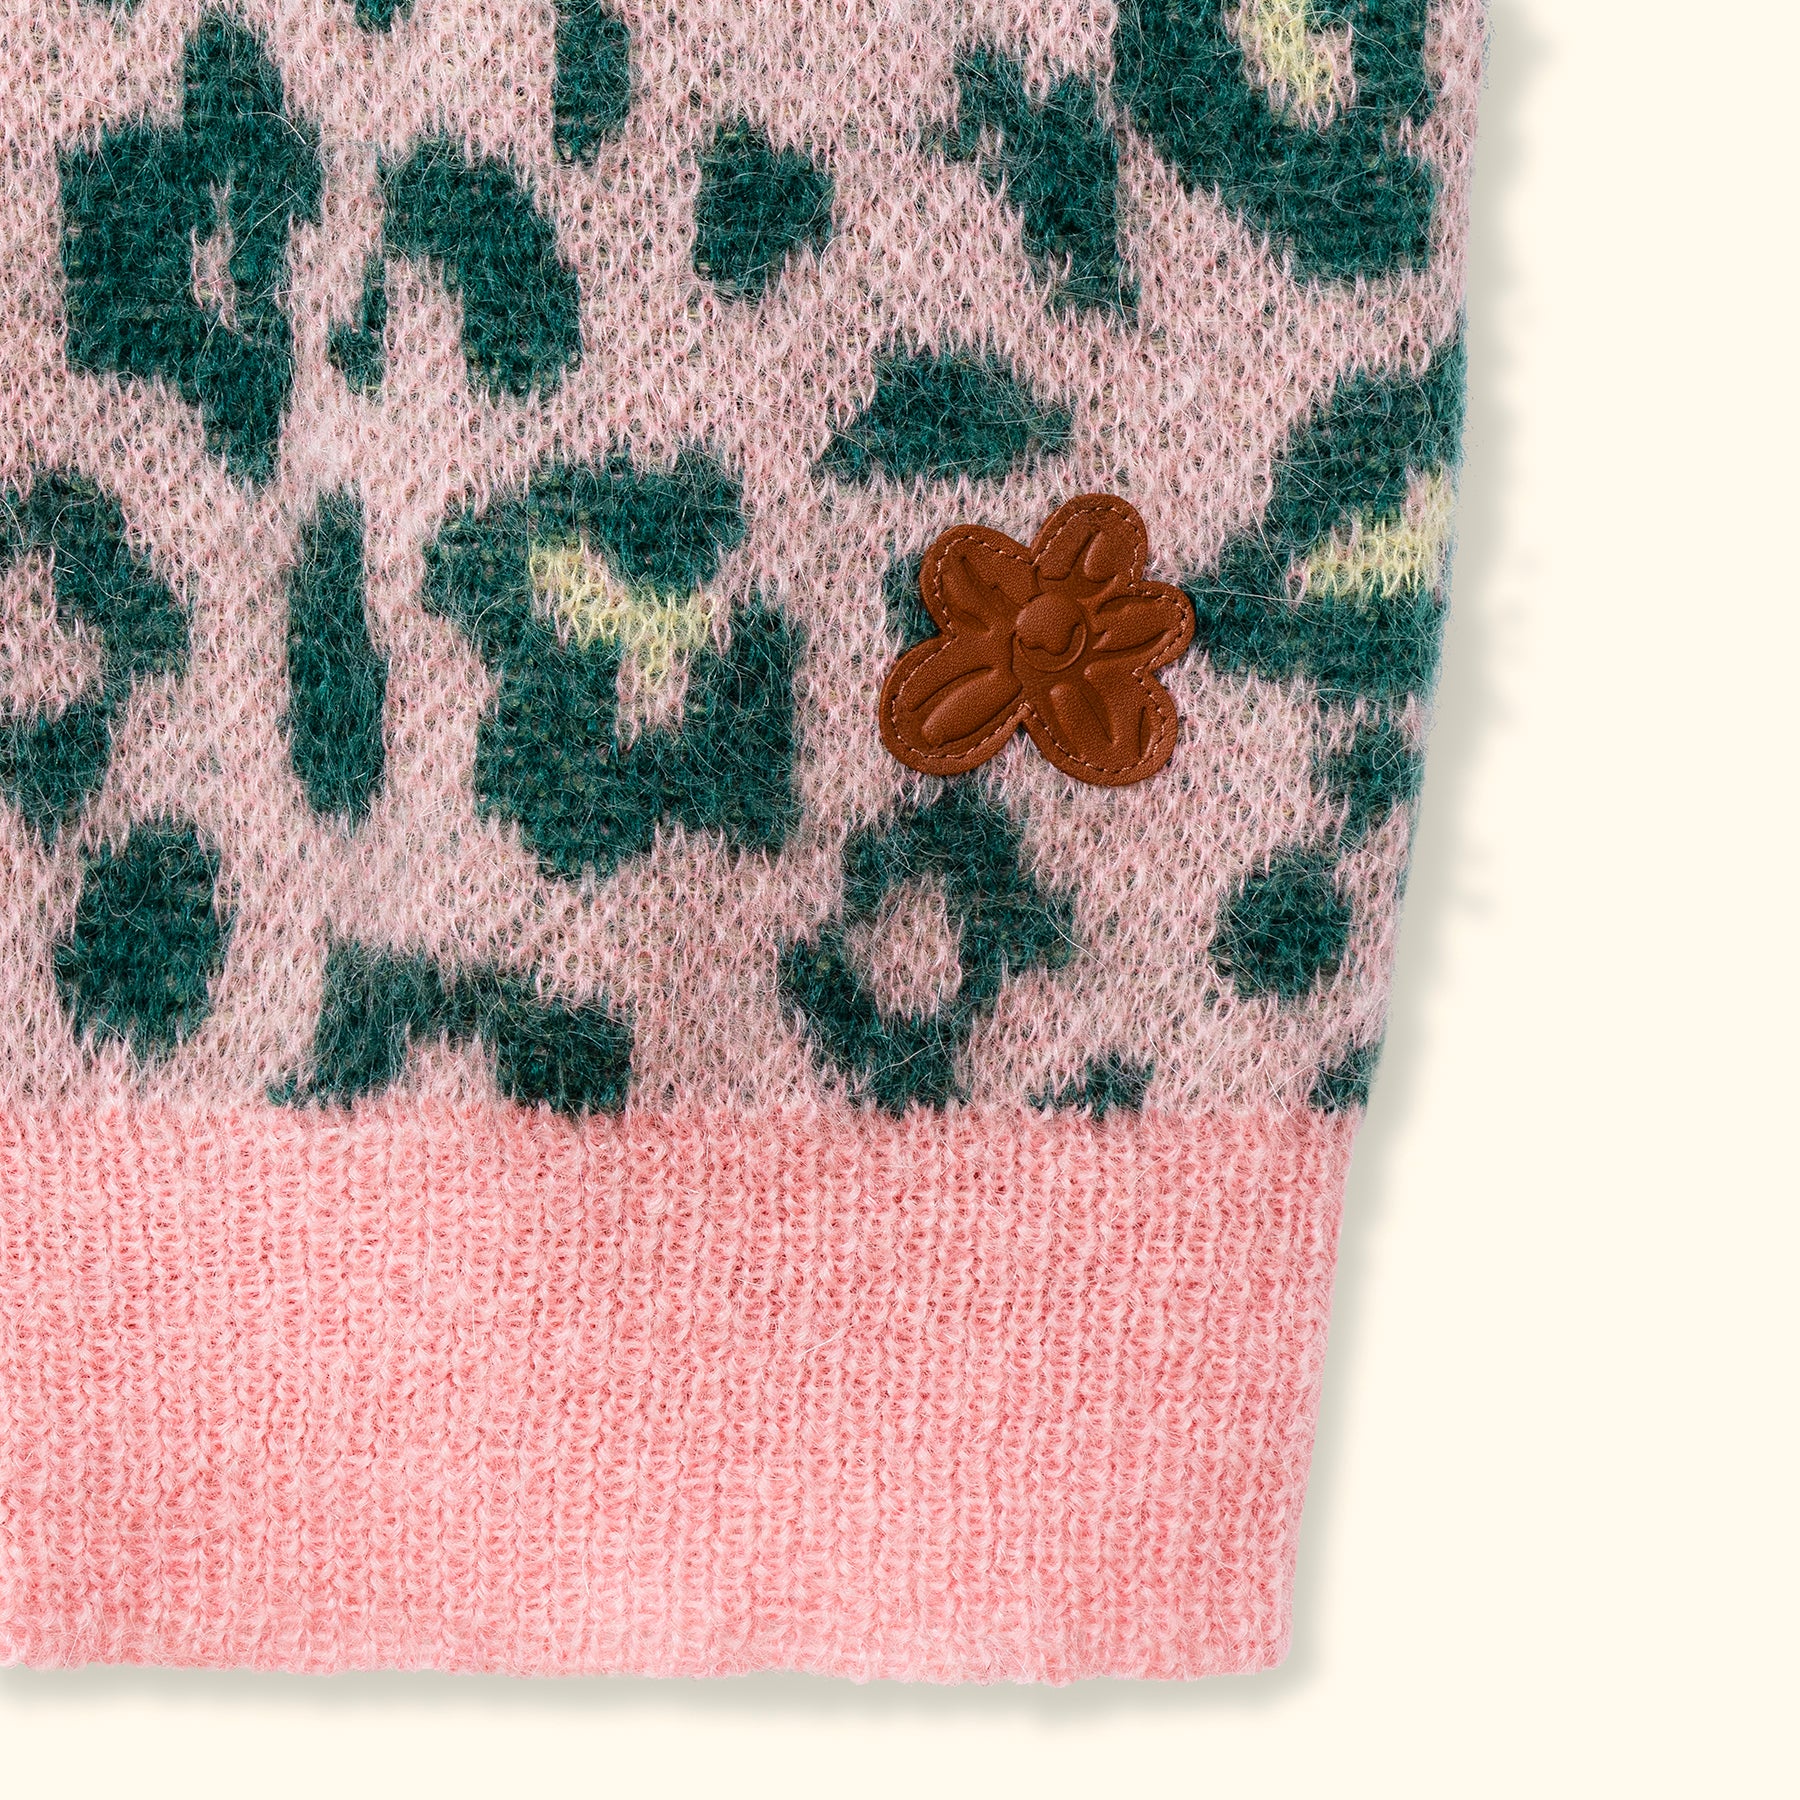 Fleur Camo Sweater Vest Pink/Green